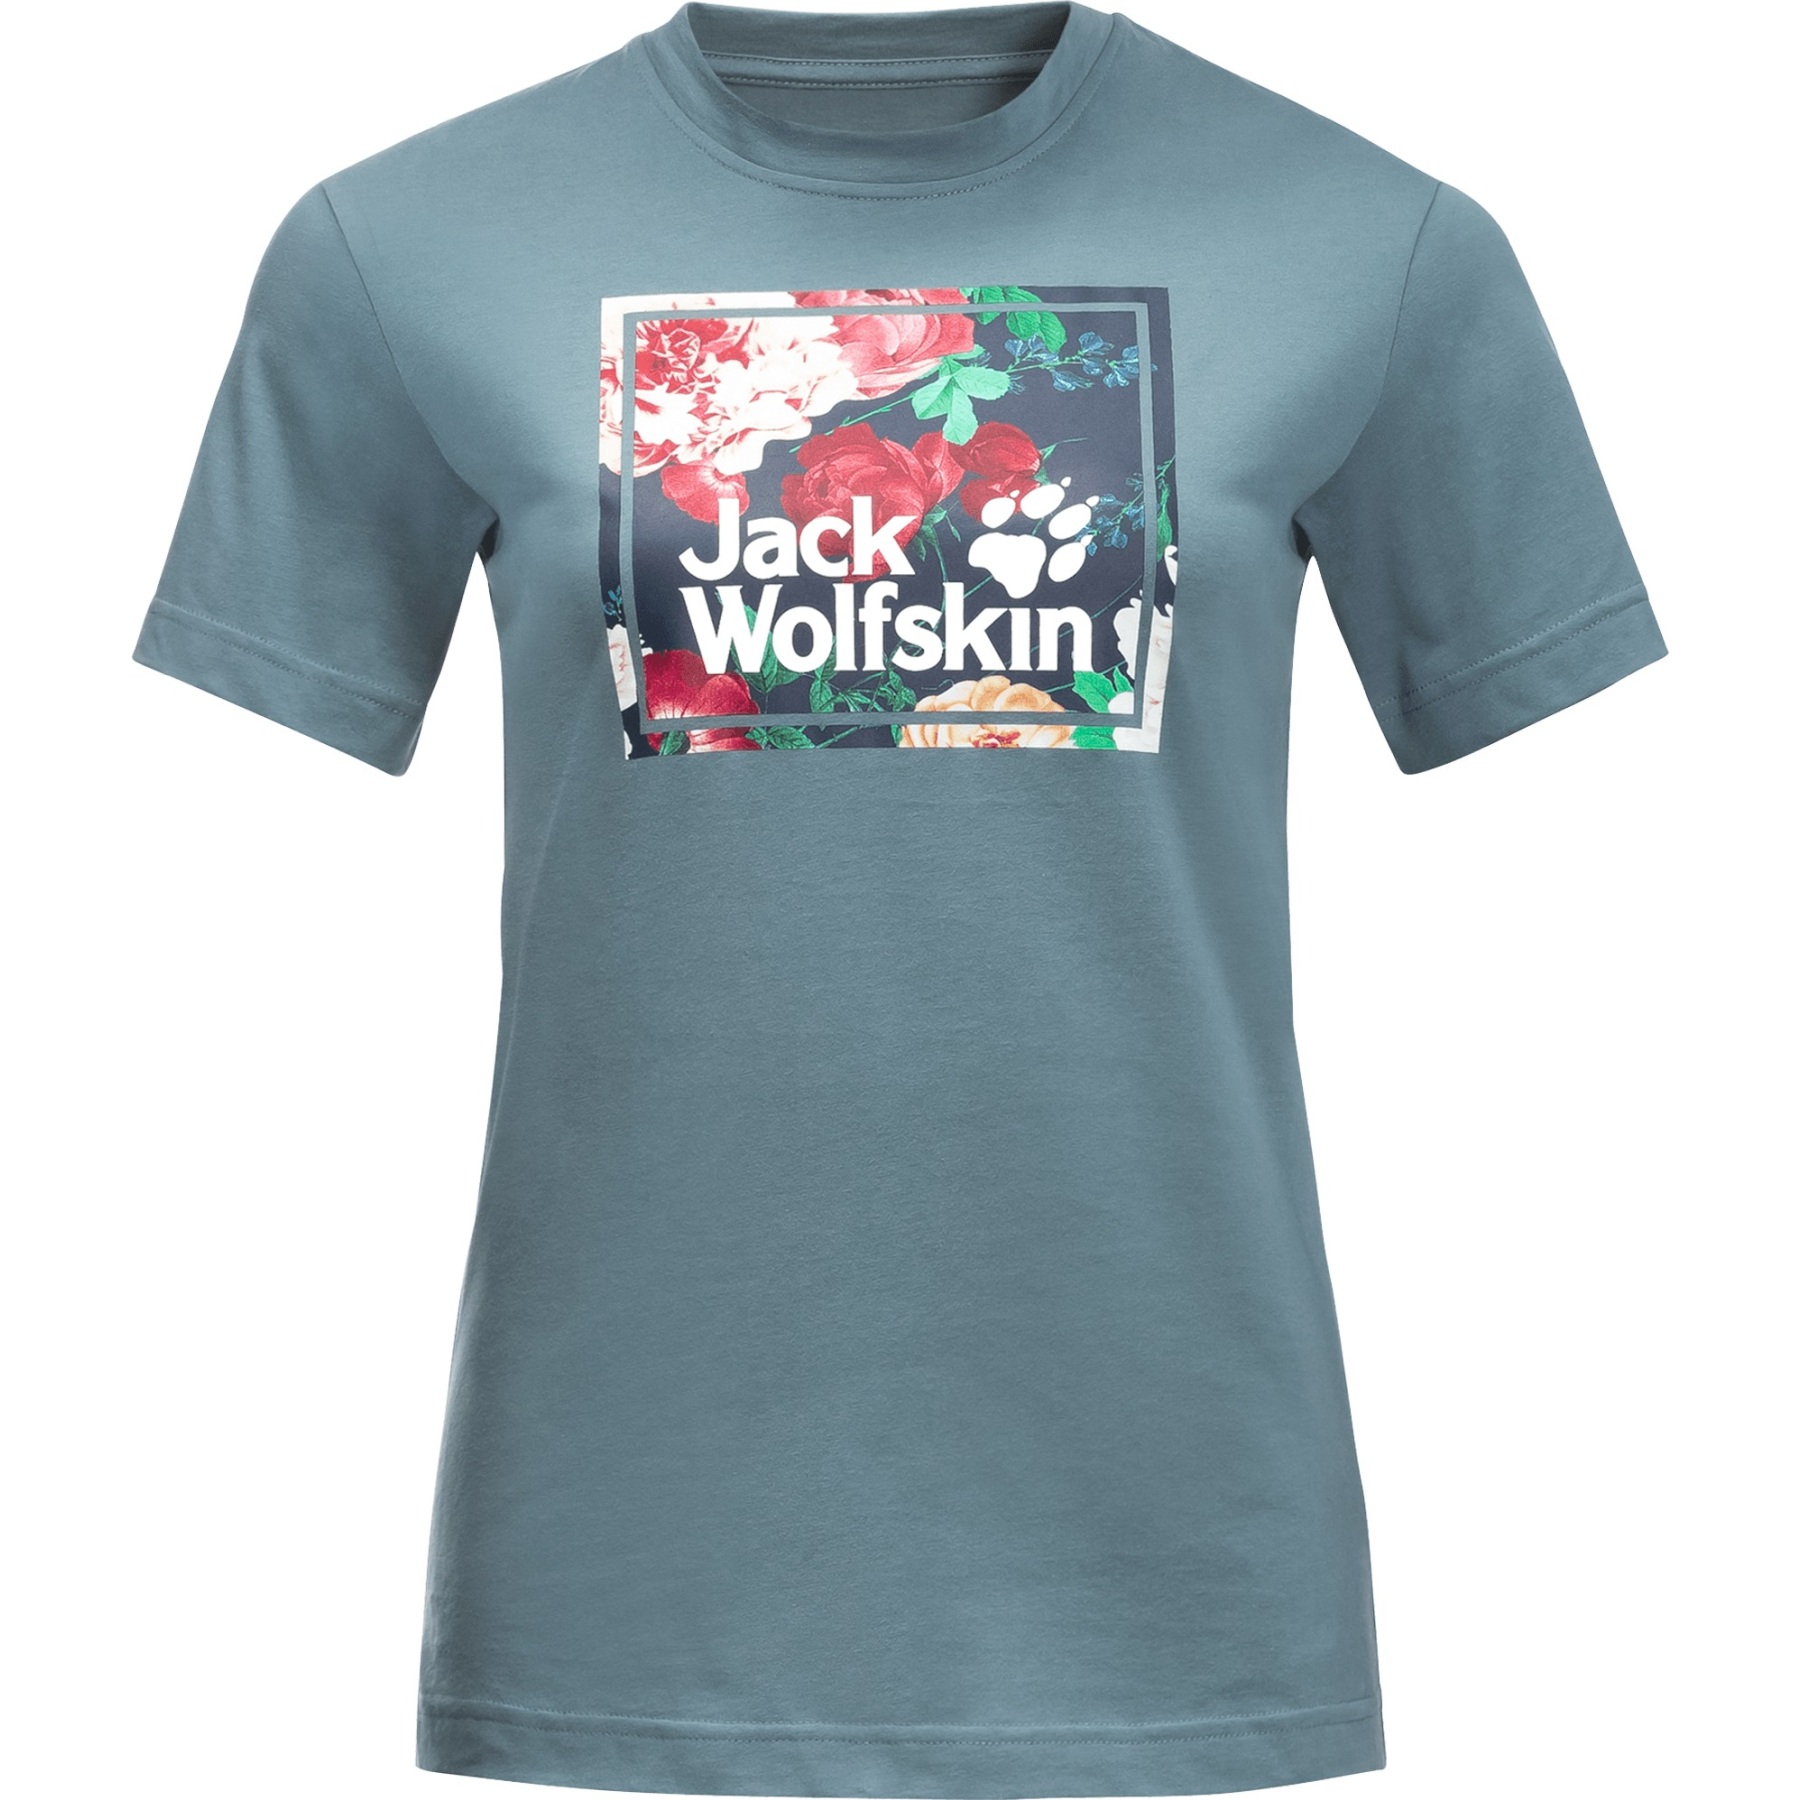 Image of Jack Wolfskin Flower Logo T-Shirt Women - teal grey